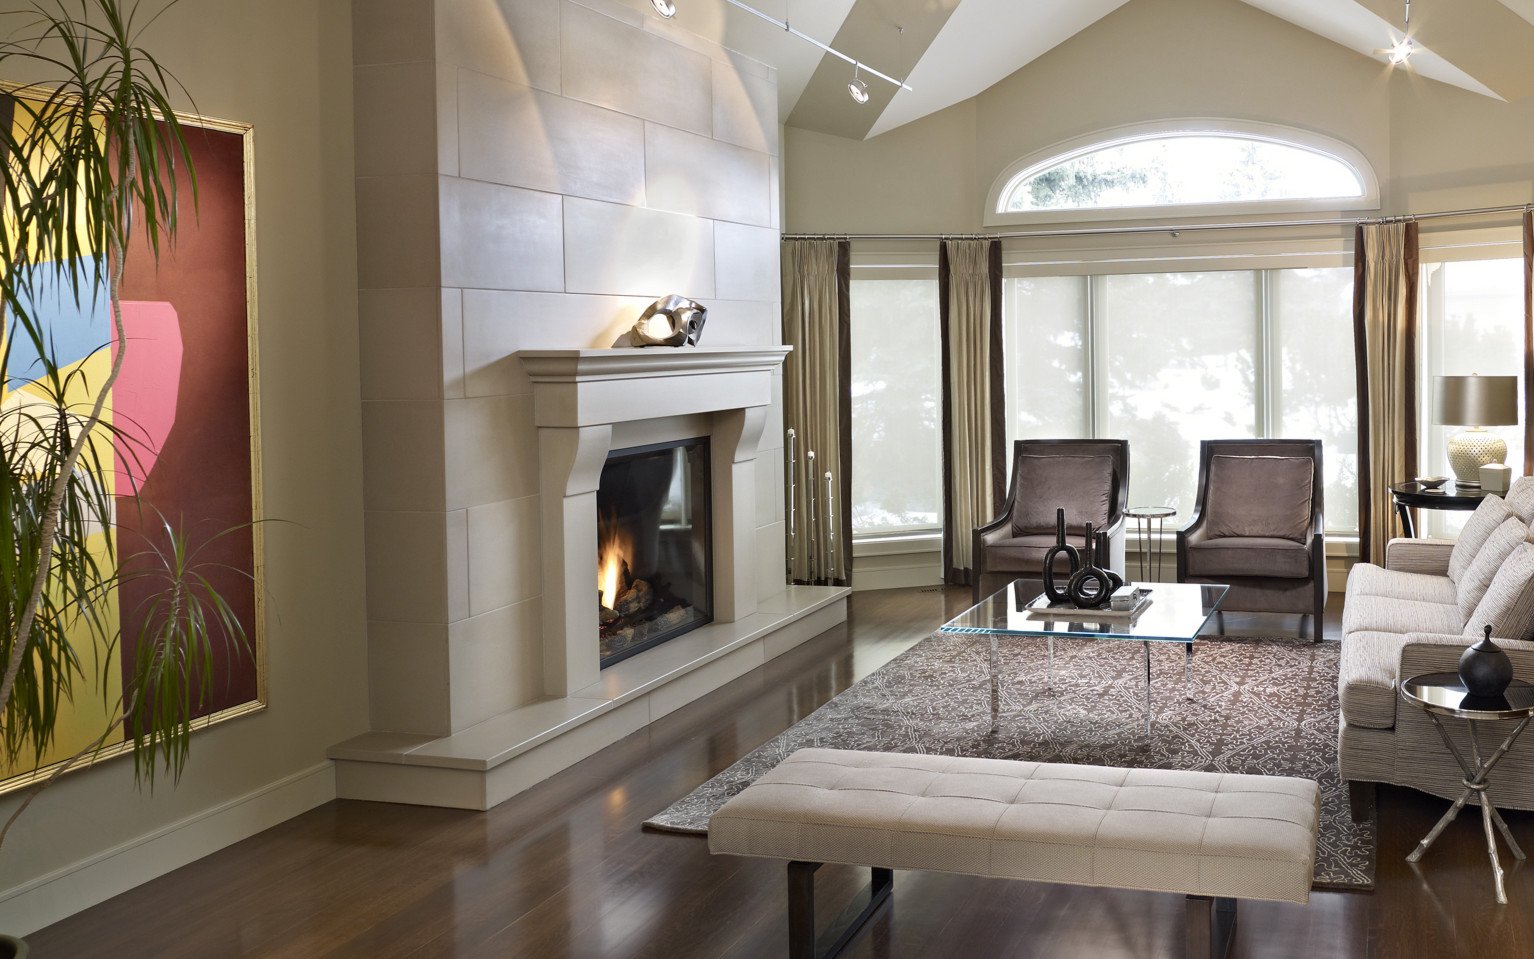 Solus Decor contemporary custom fireplace surrounds